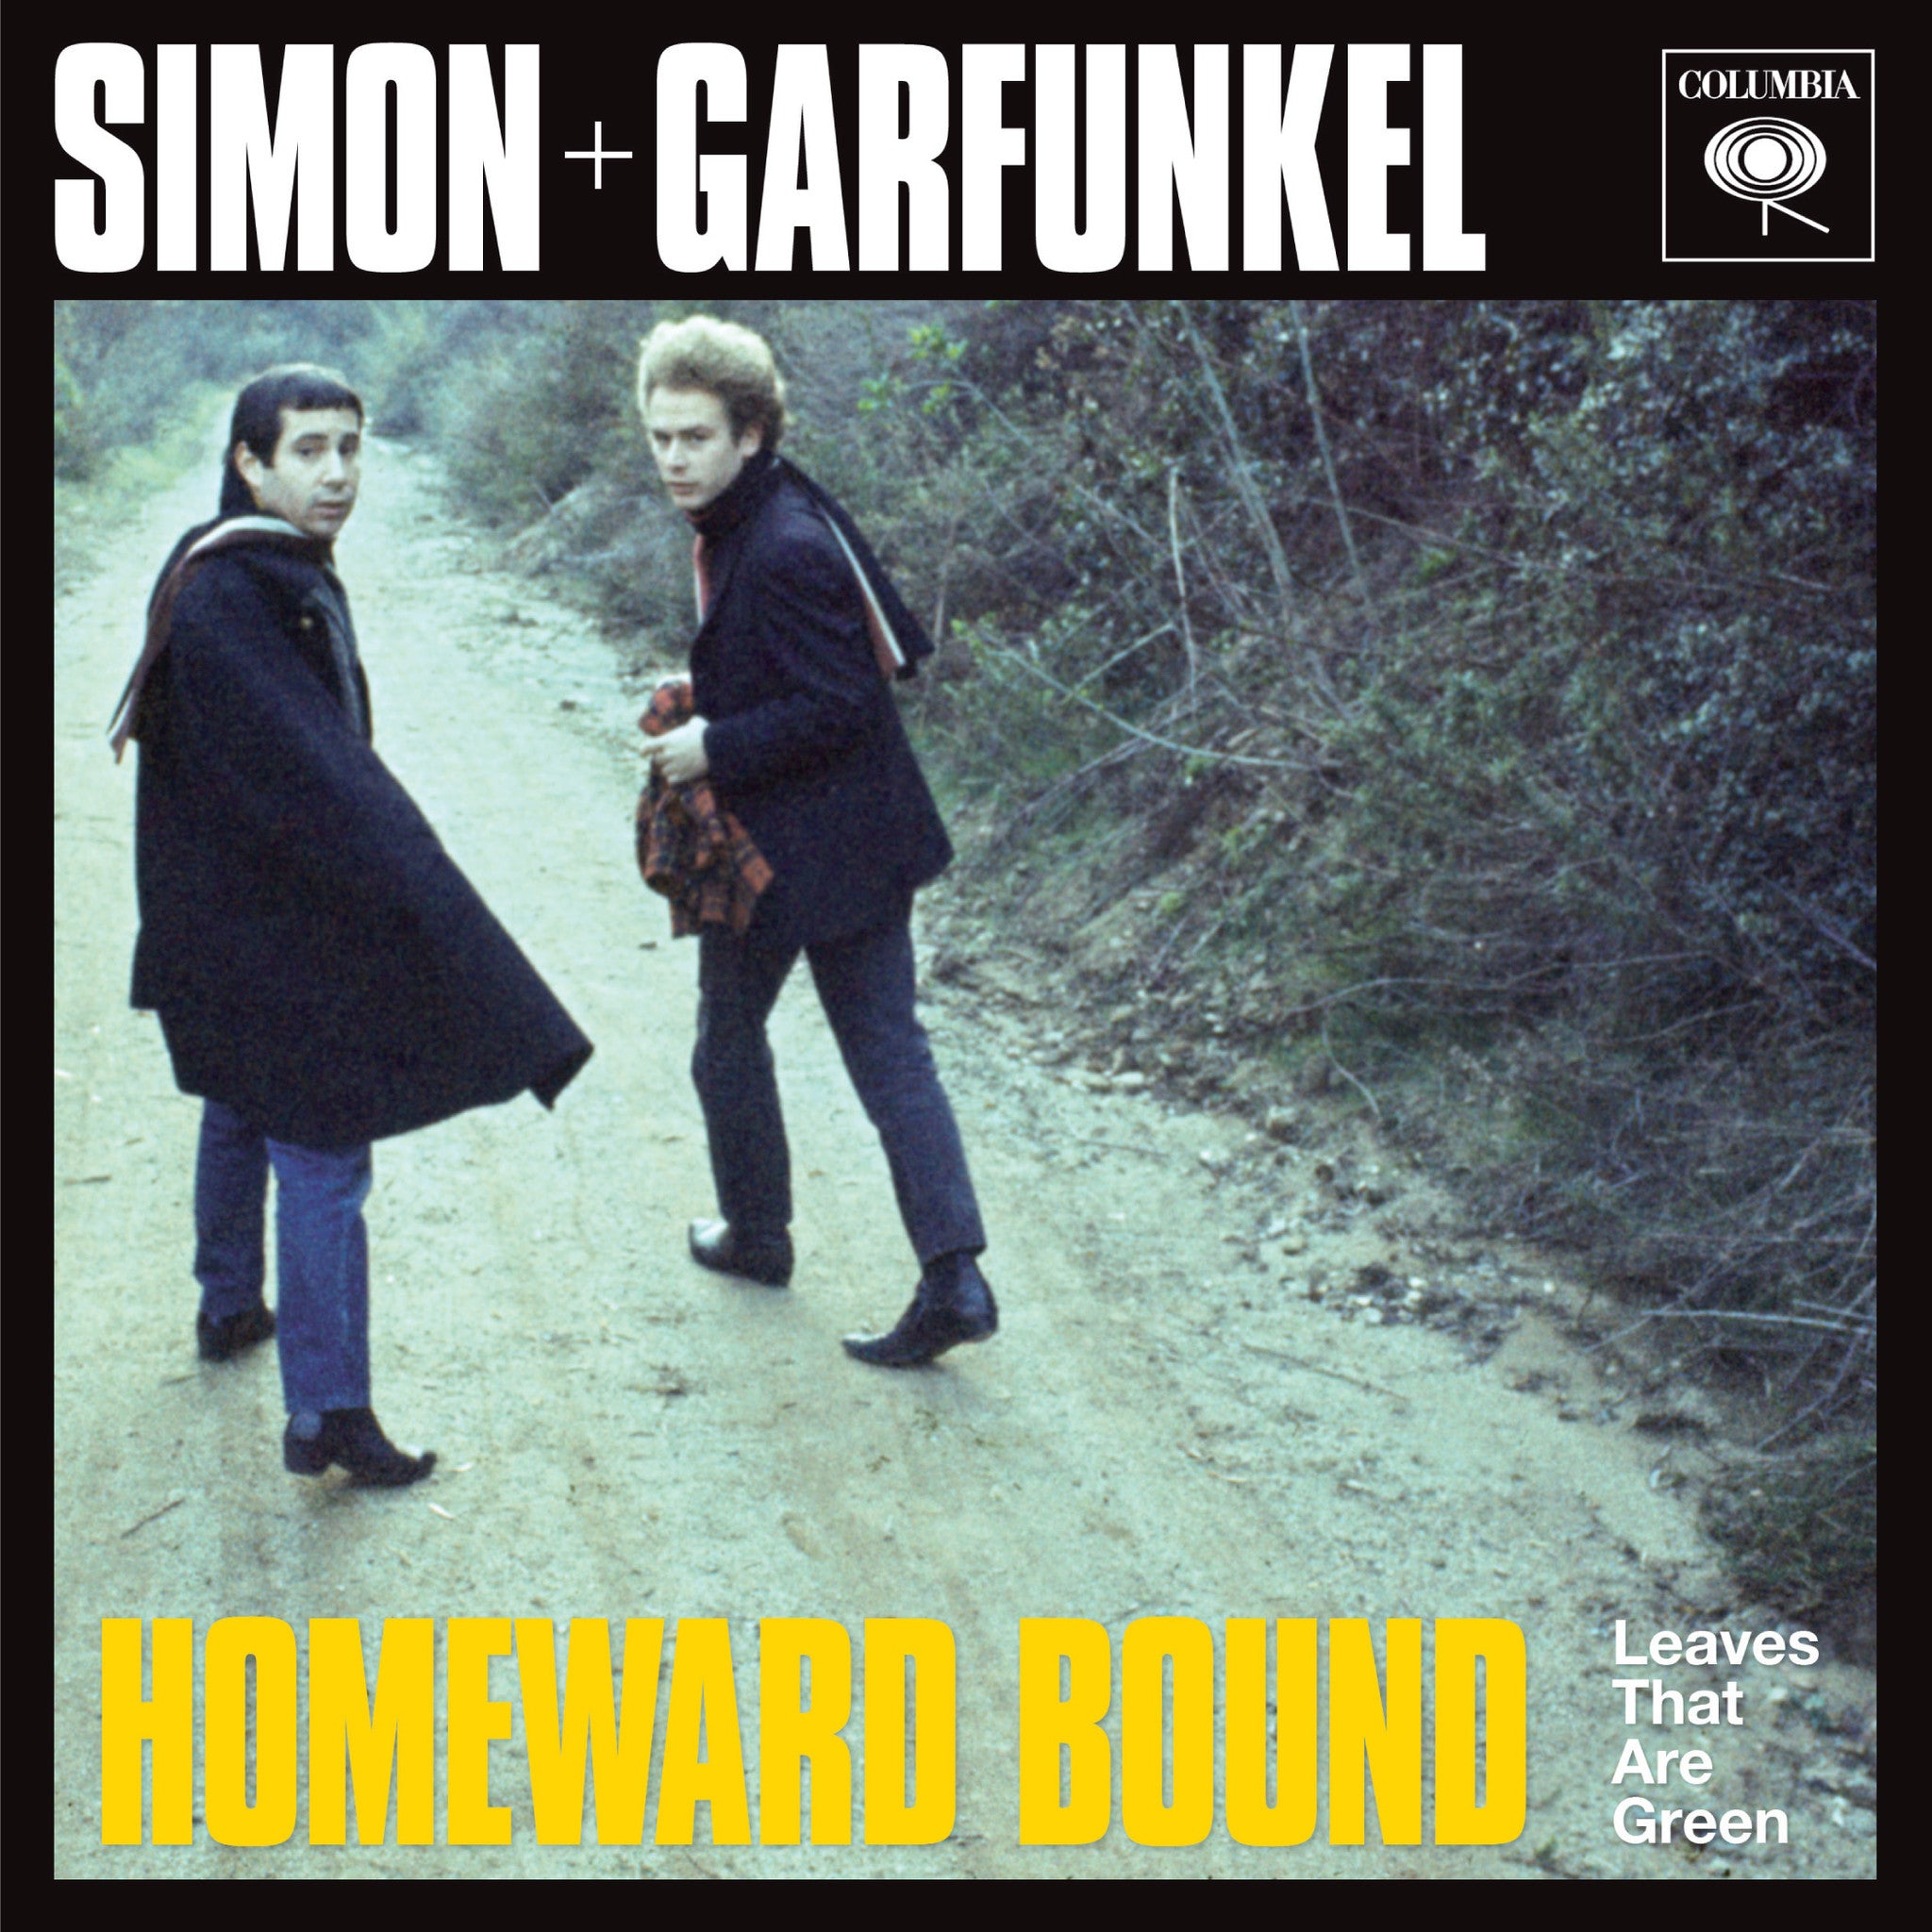 Simon + Garfunkel - Homeward Bound/Leaves That Are Green 7" (RSD2018)